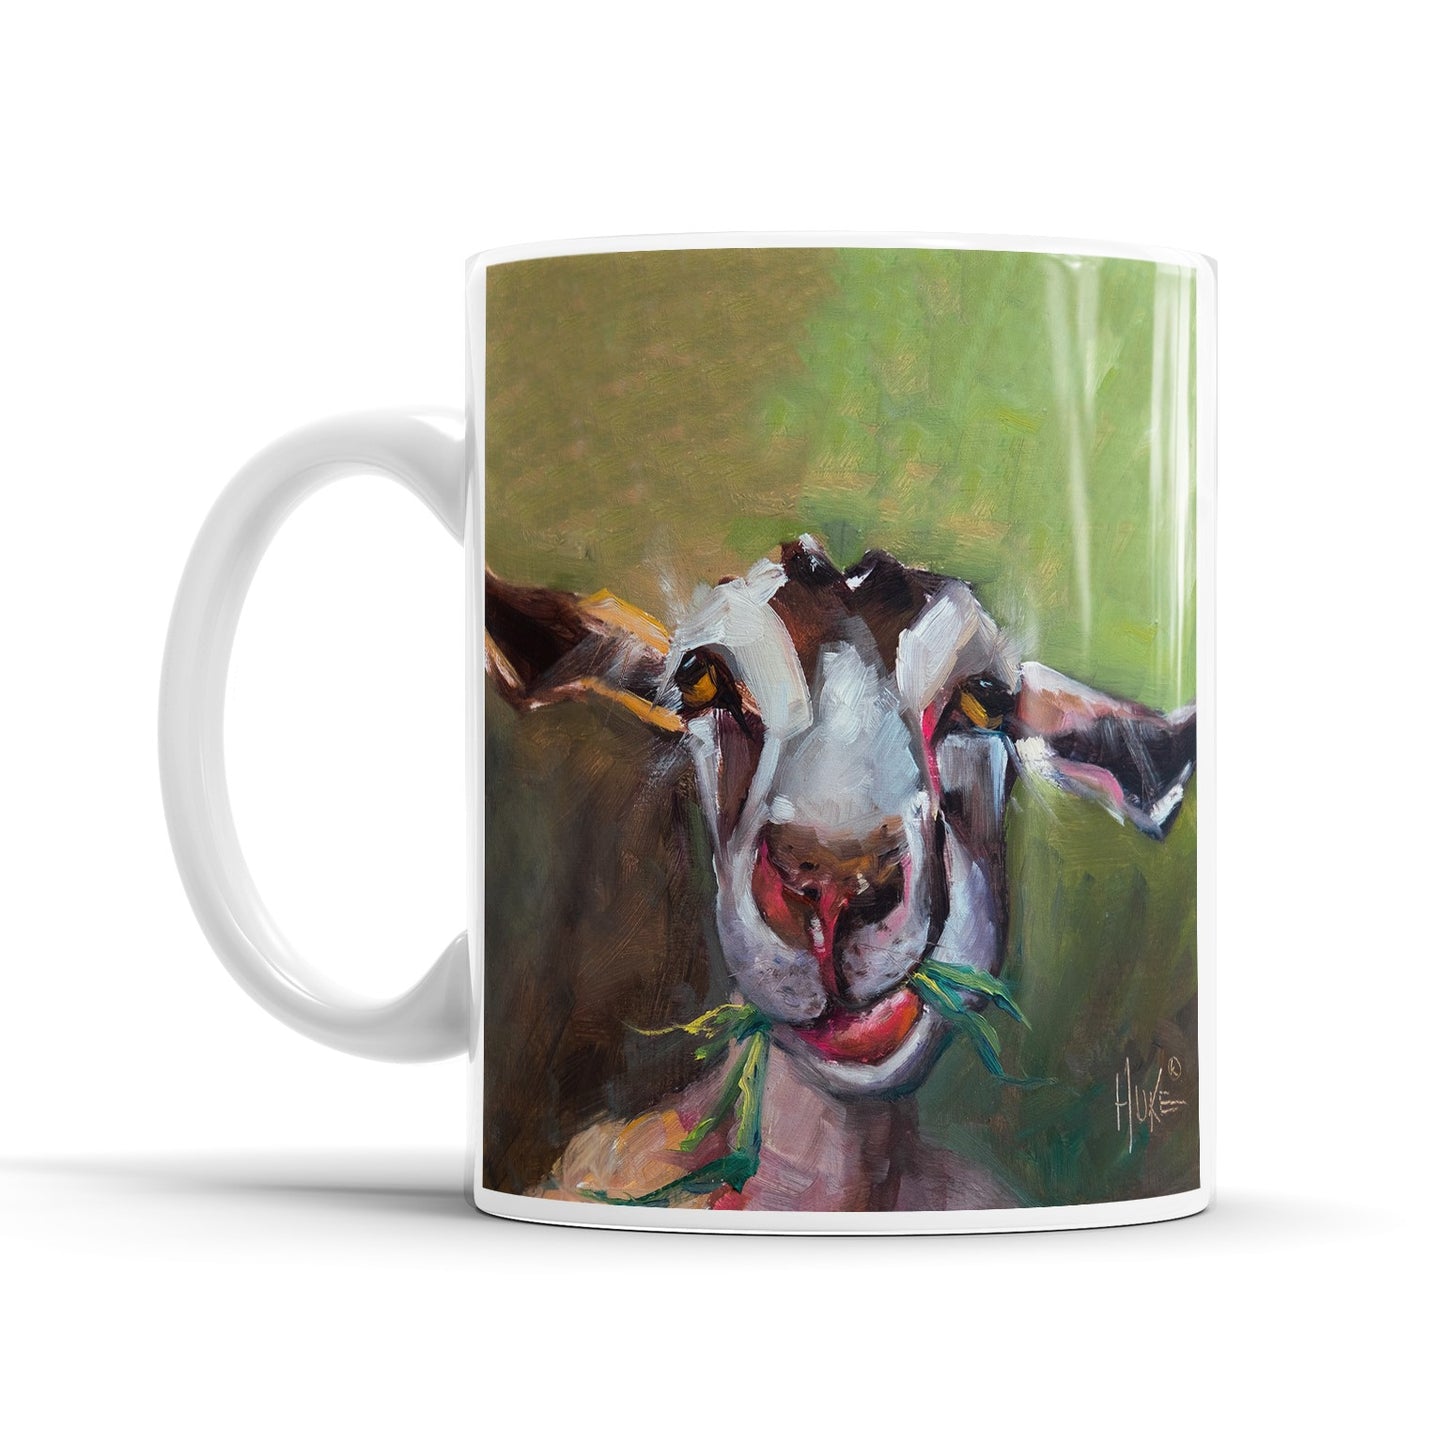 Rustic Goat Mug By K. Huke